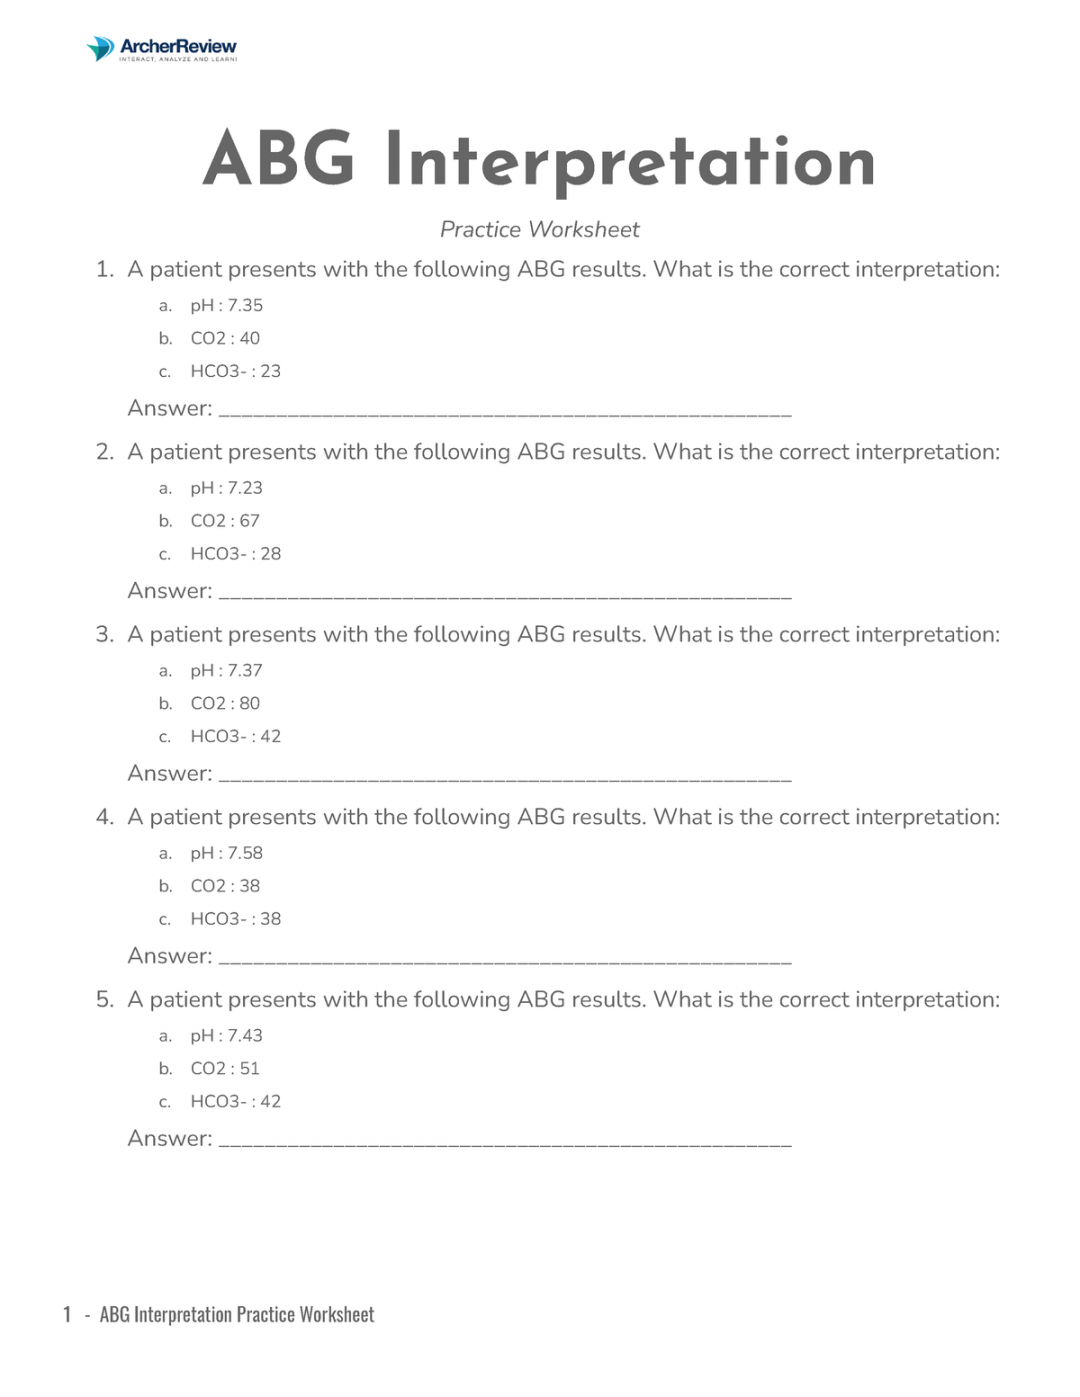 ABG interpretation worksheet - ABG Interpretation Practice